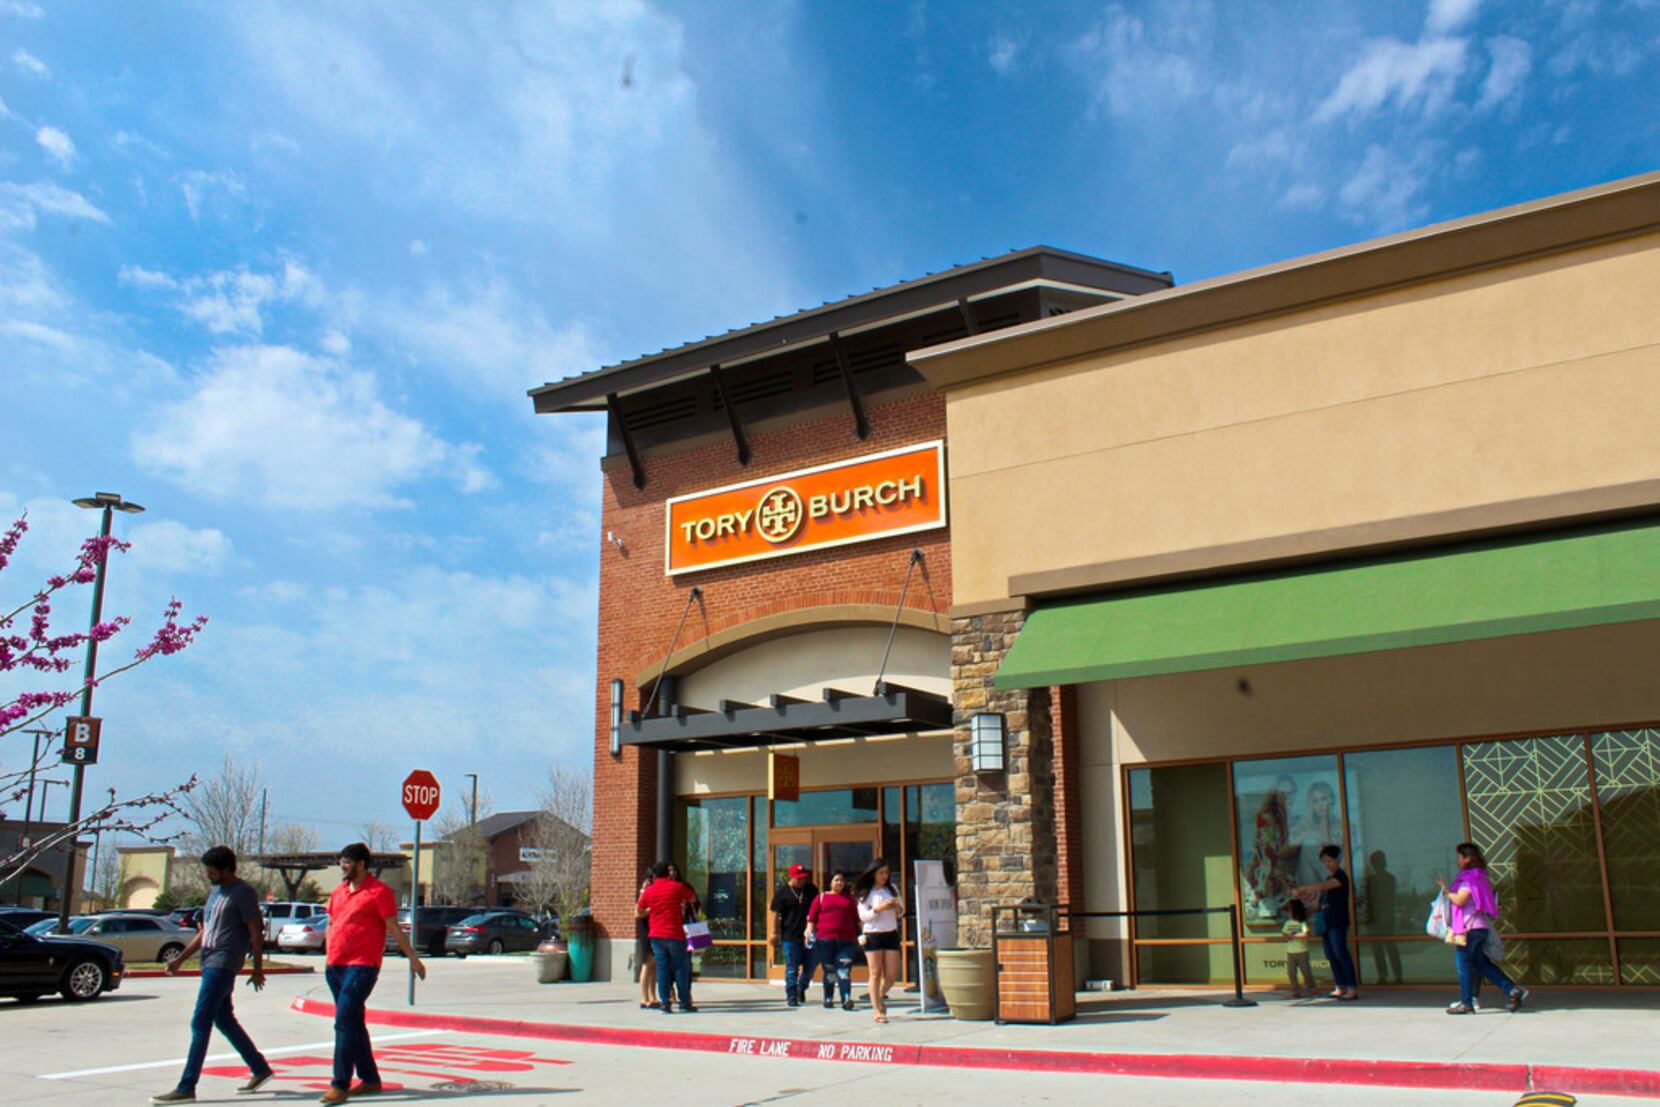 Michael Kors latest retailer to announce store closures - Houston